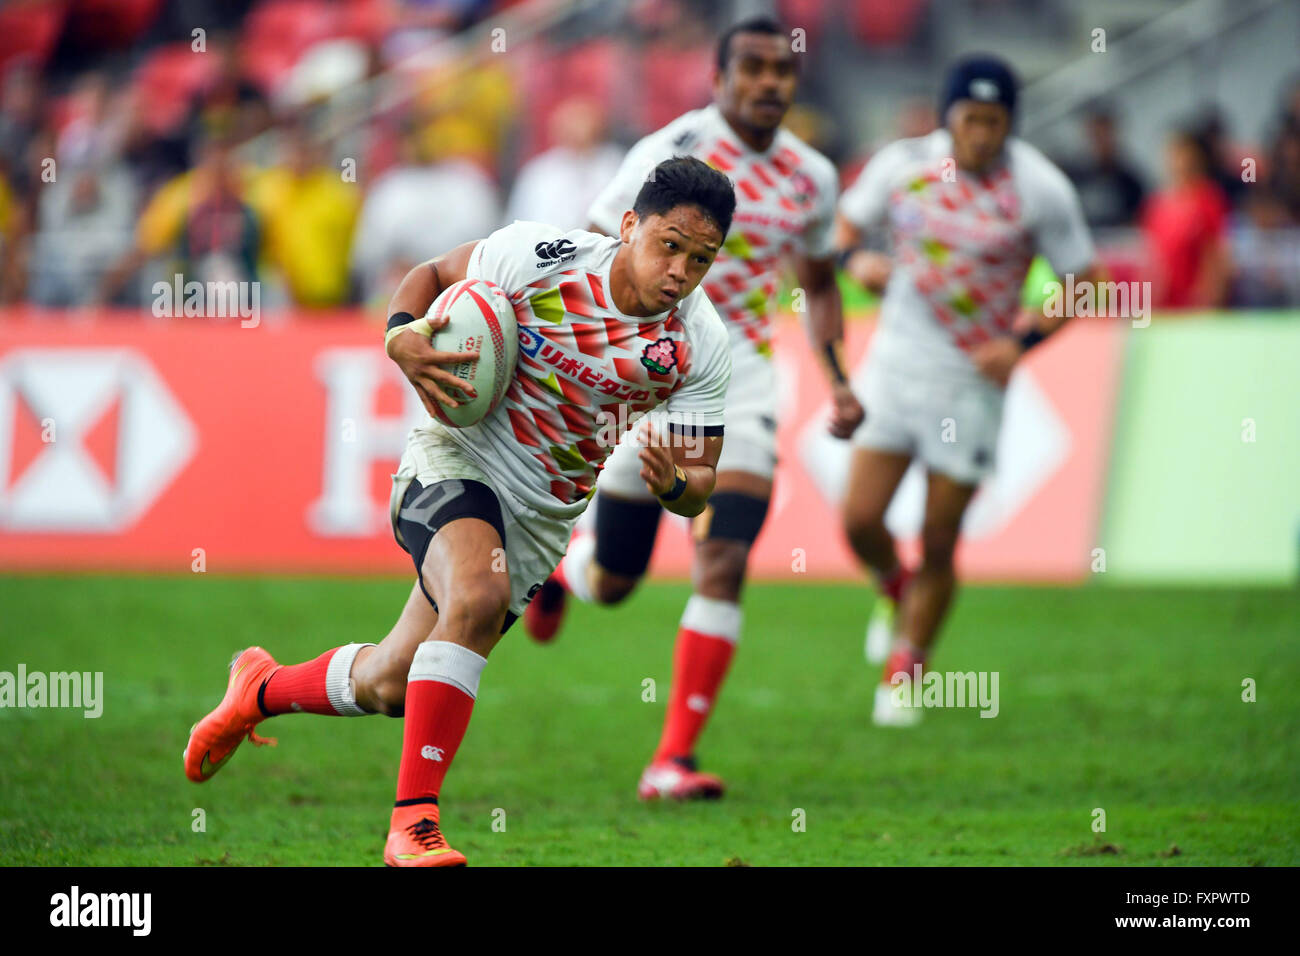 Kazuhiro Goya (JPN), APRL 16, 2016 - Rugby : HSBC Sevens World Series, Singapore Sevens match Japan and Australia at National Stadium in Singapore. (Photo by Haruhiko Otsuka/AFLO) Stock Photo